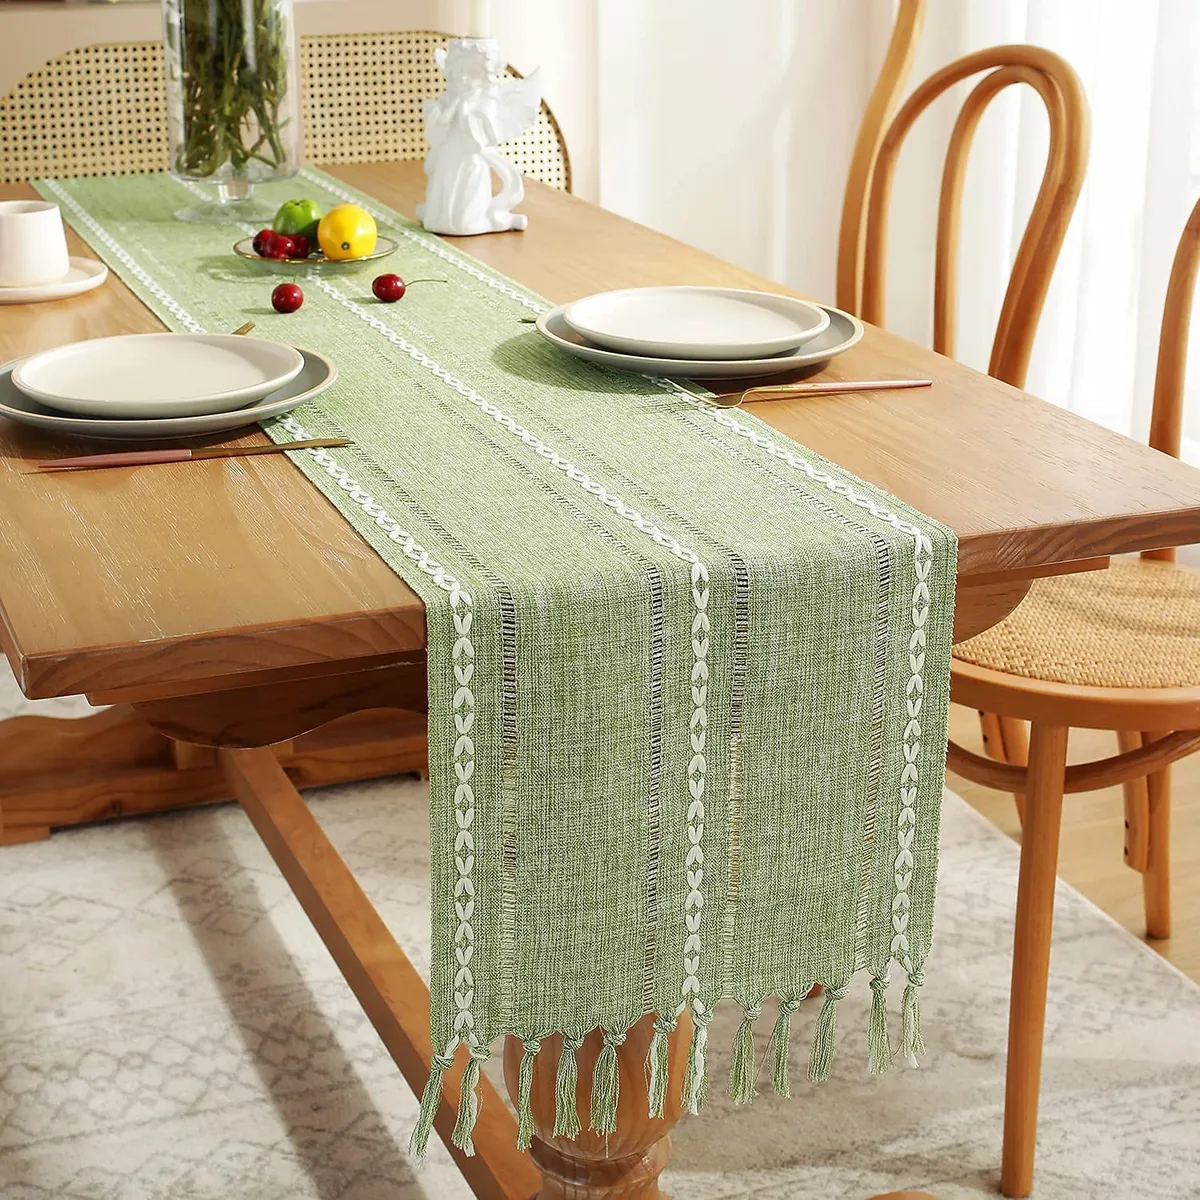 LOMOHOO Rustic linen table runner with handmade tassel